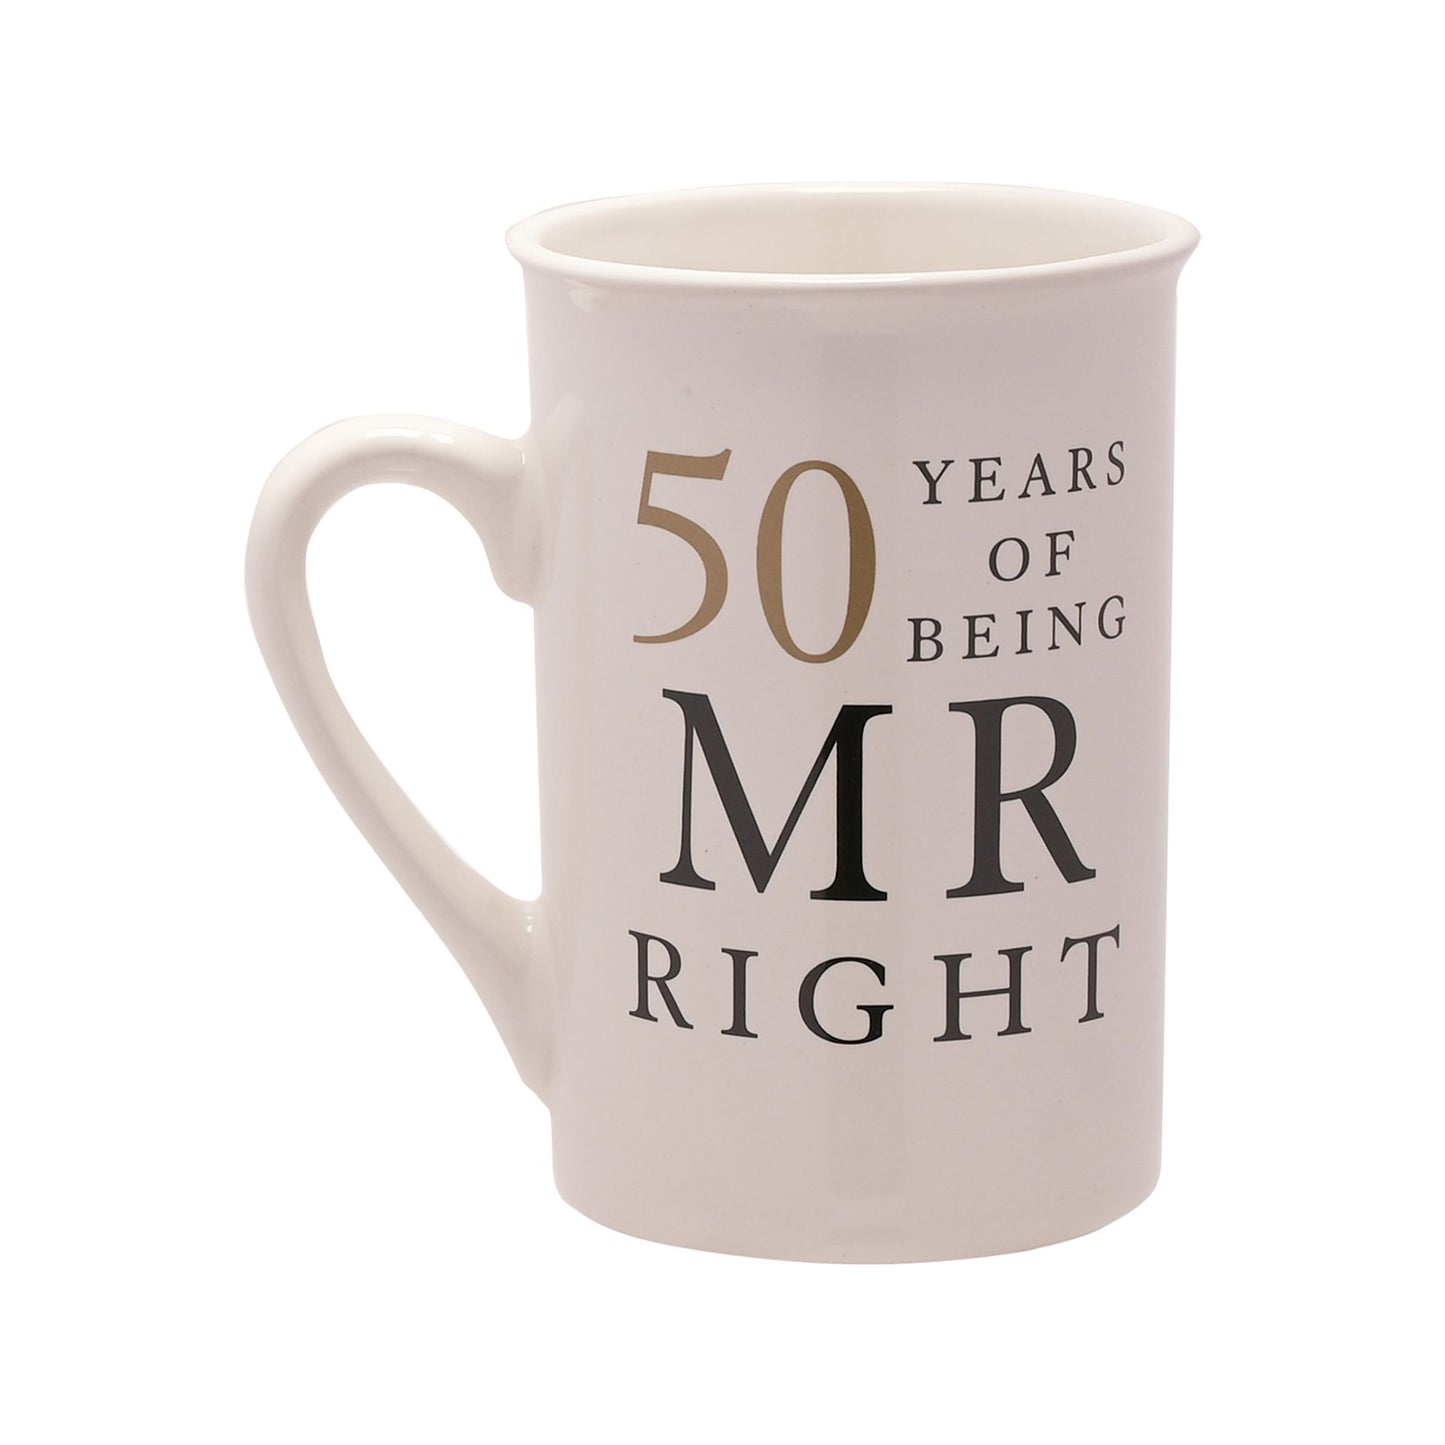 50th Wedding Anniversary Mugs - "Mr Right & Mrs Always Right"